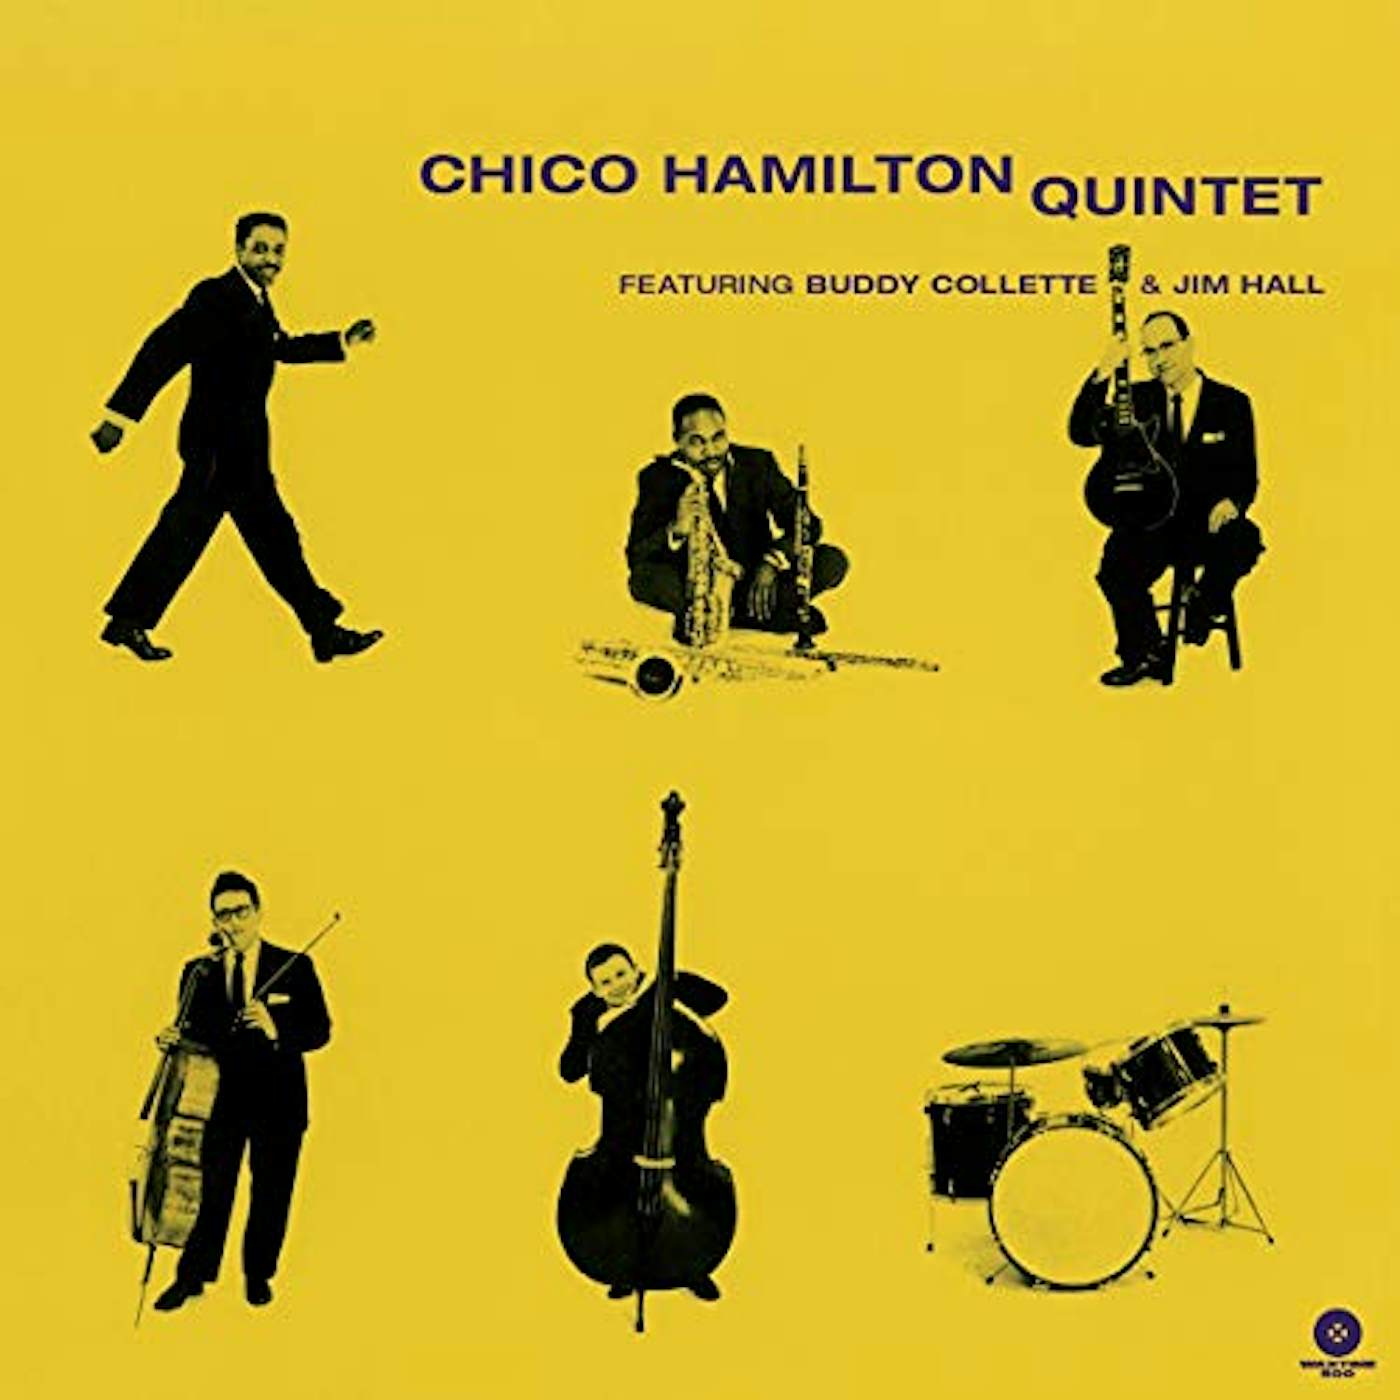 Chico Hamilton QUINTET (FEAT BUDDY COLLETTE & JIM HALL) Vinyl Record - Limited Edition